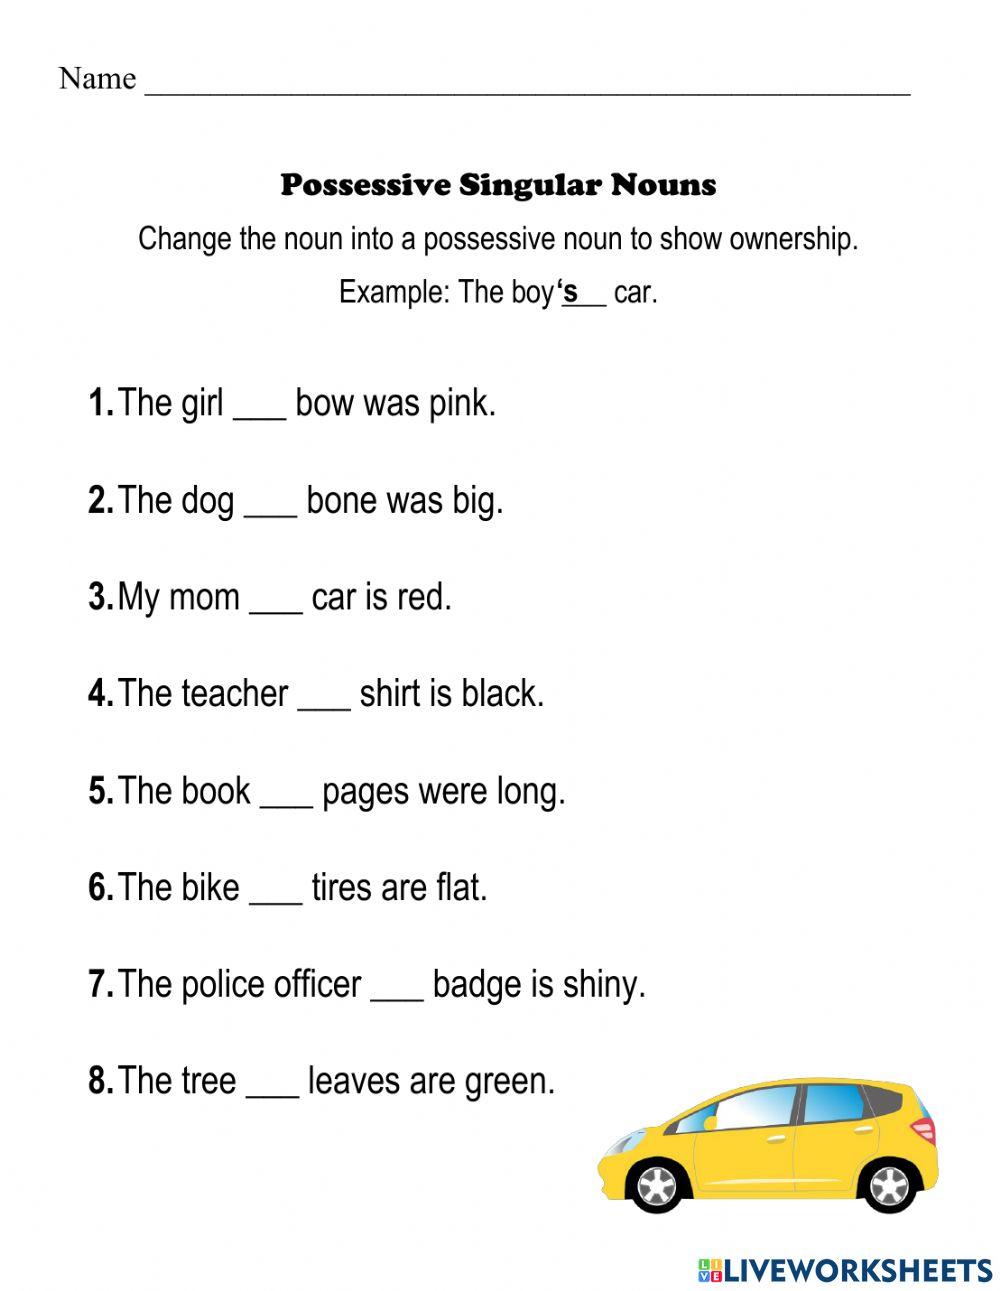 Possessive Singular Nouns